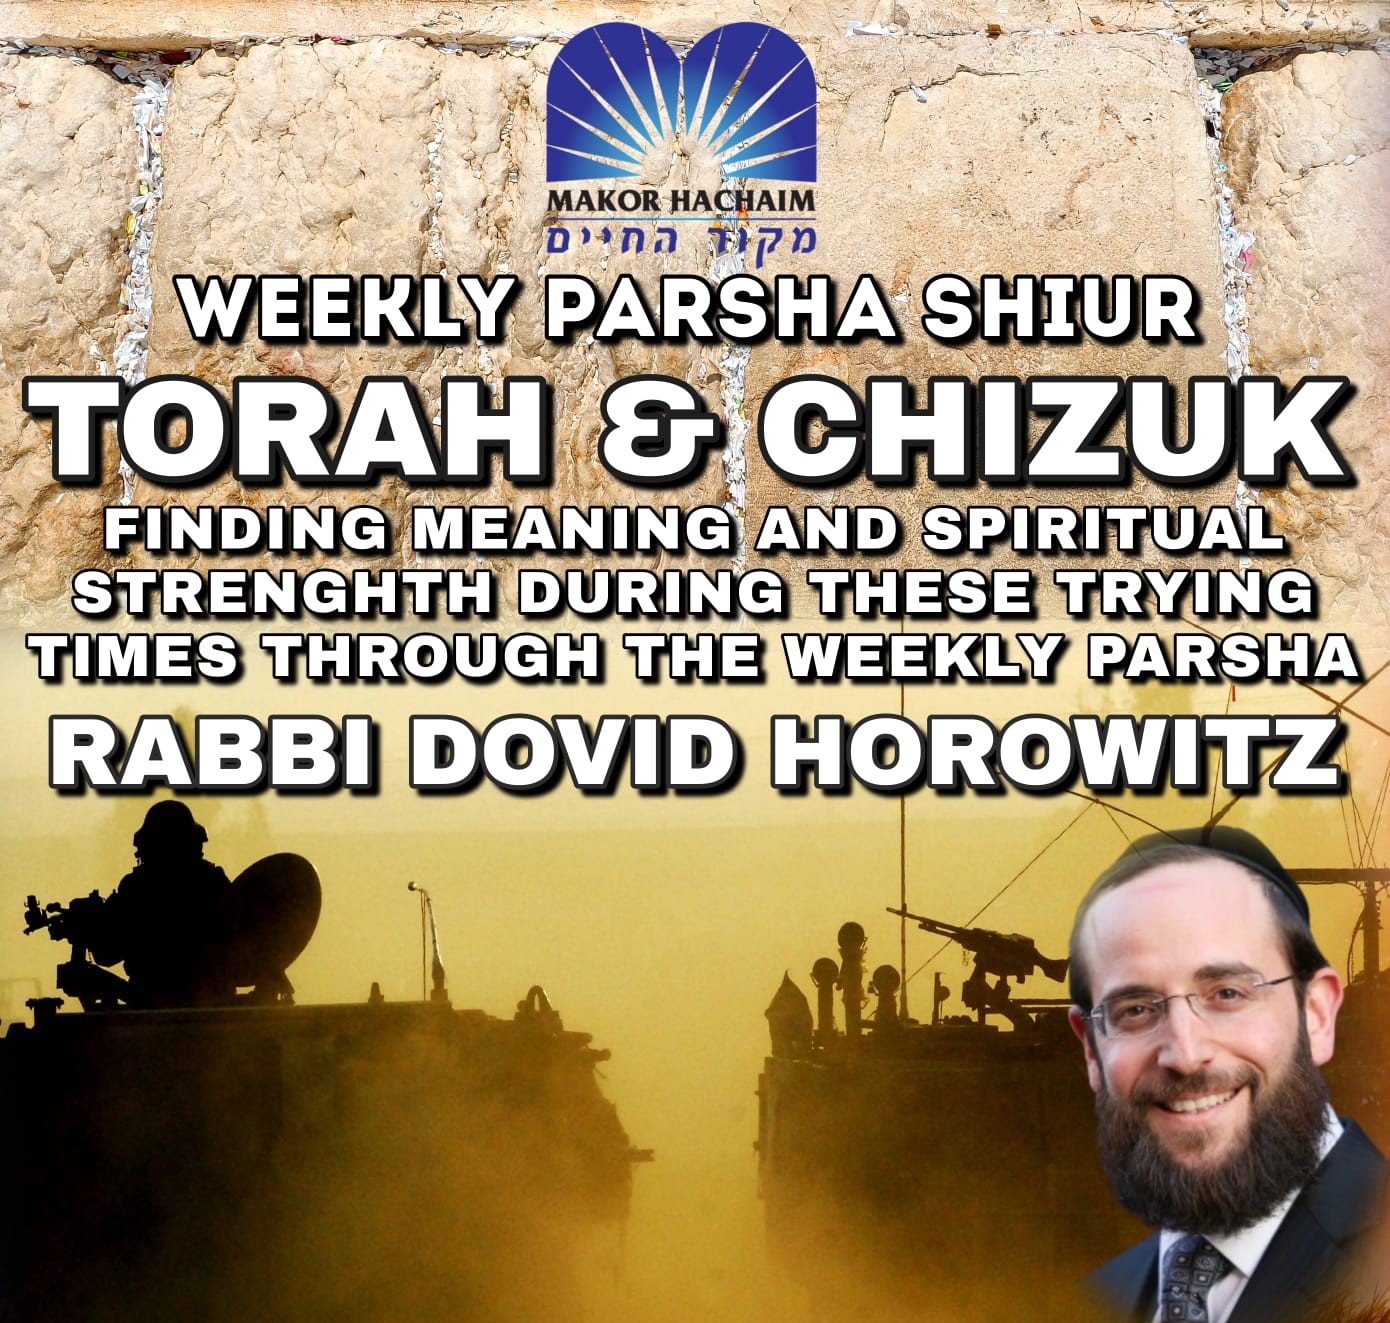 PARSHAS BEHA'ALOSCHA: The True Pleasure of Torah and Mitzvos